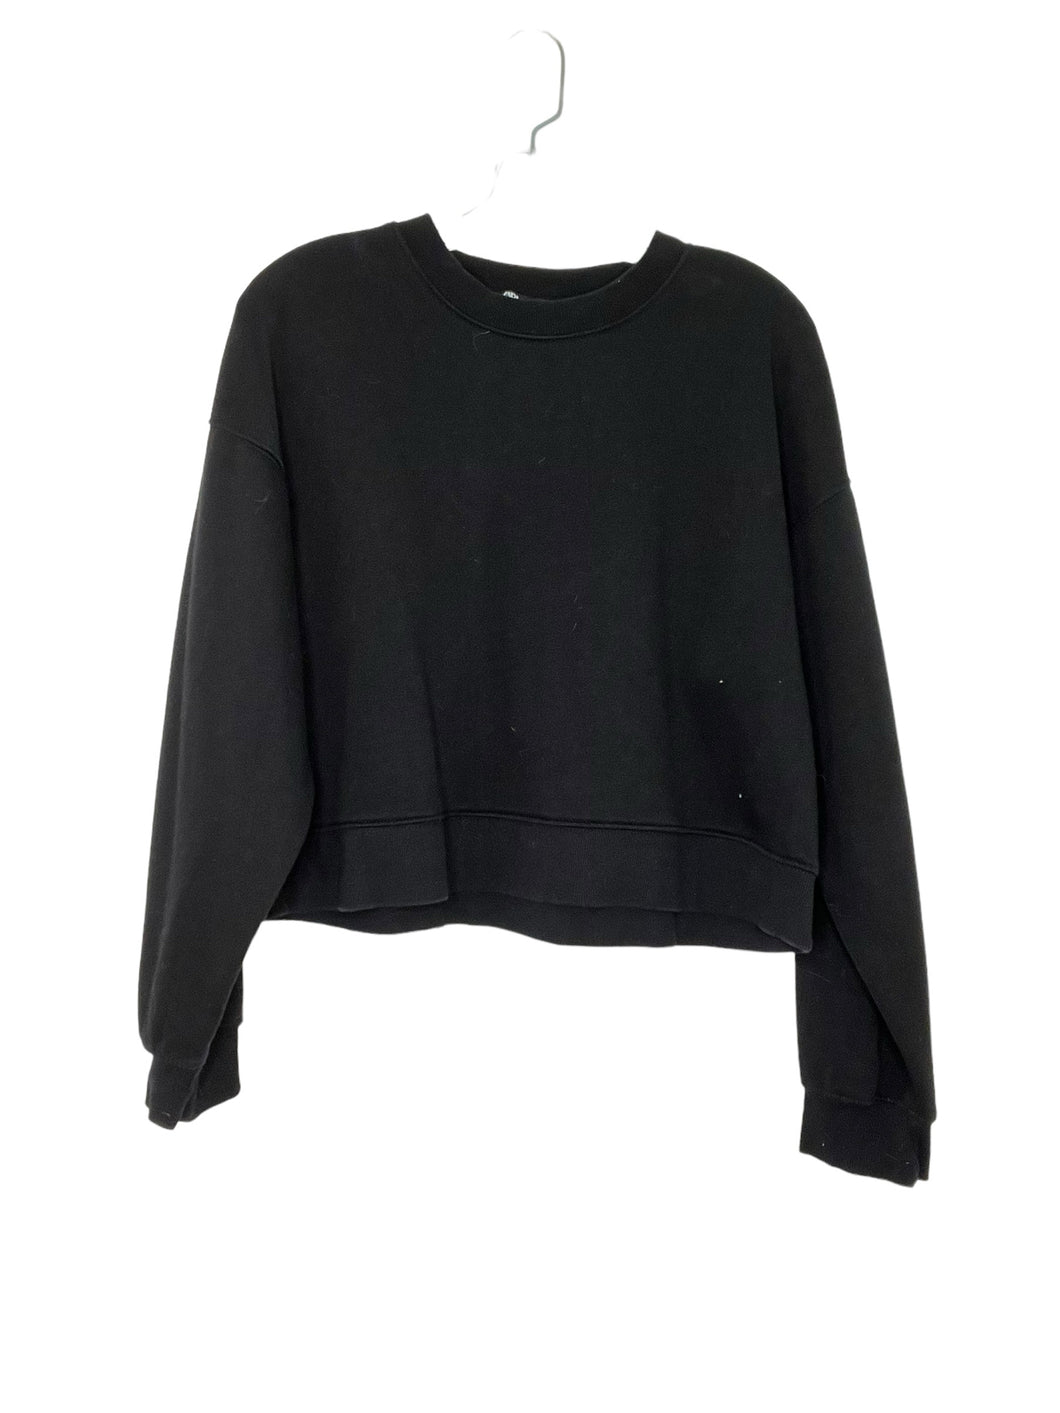 Zara Size Medium Black Sweatshirt- Ladies